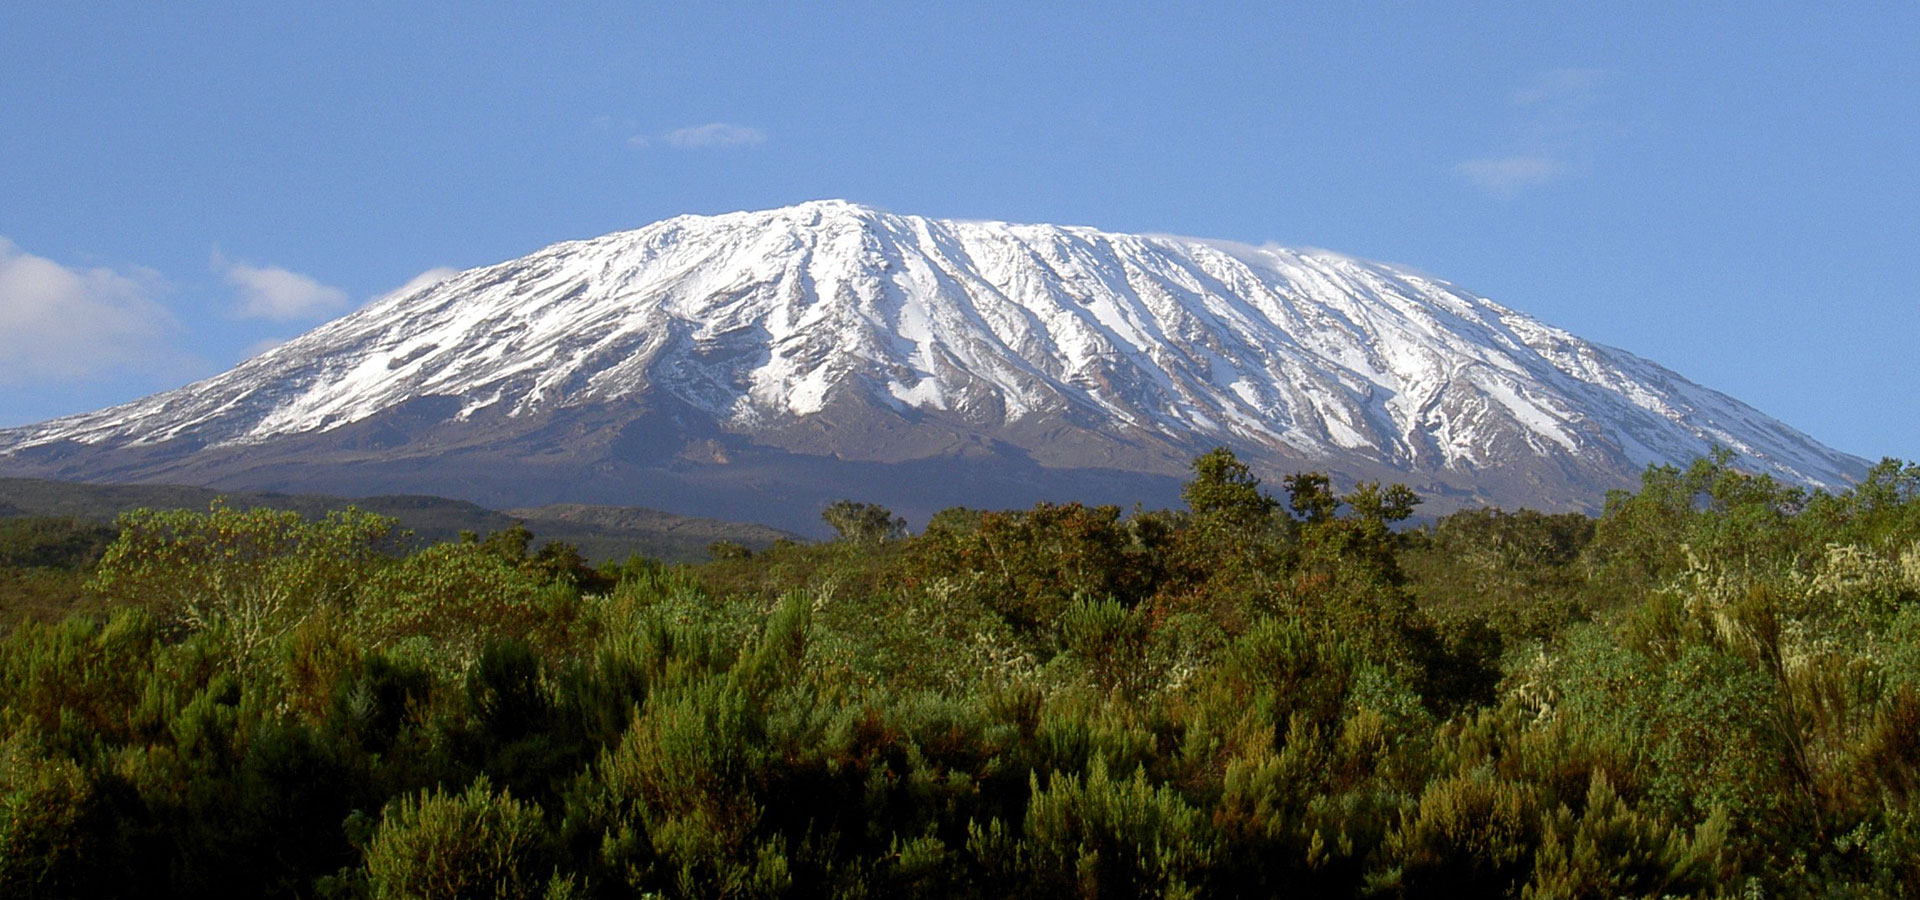 can beginner climb kilimanjaro